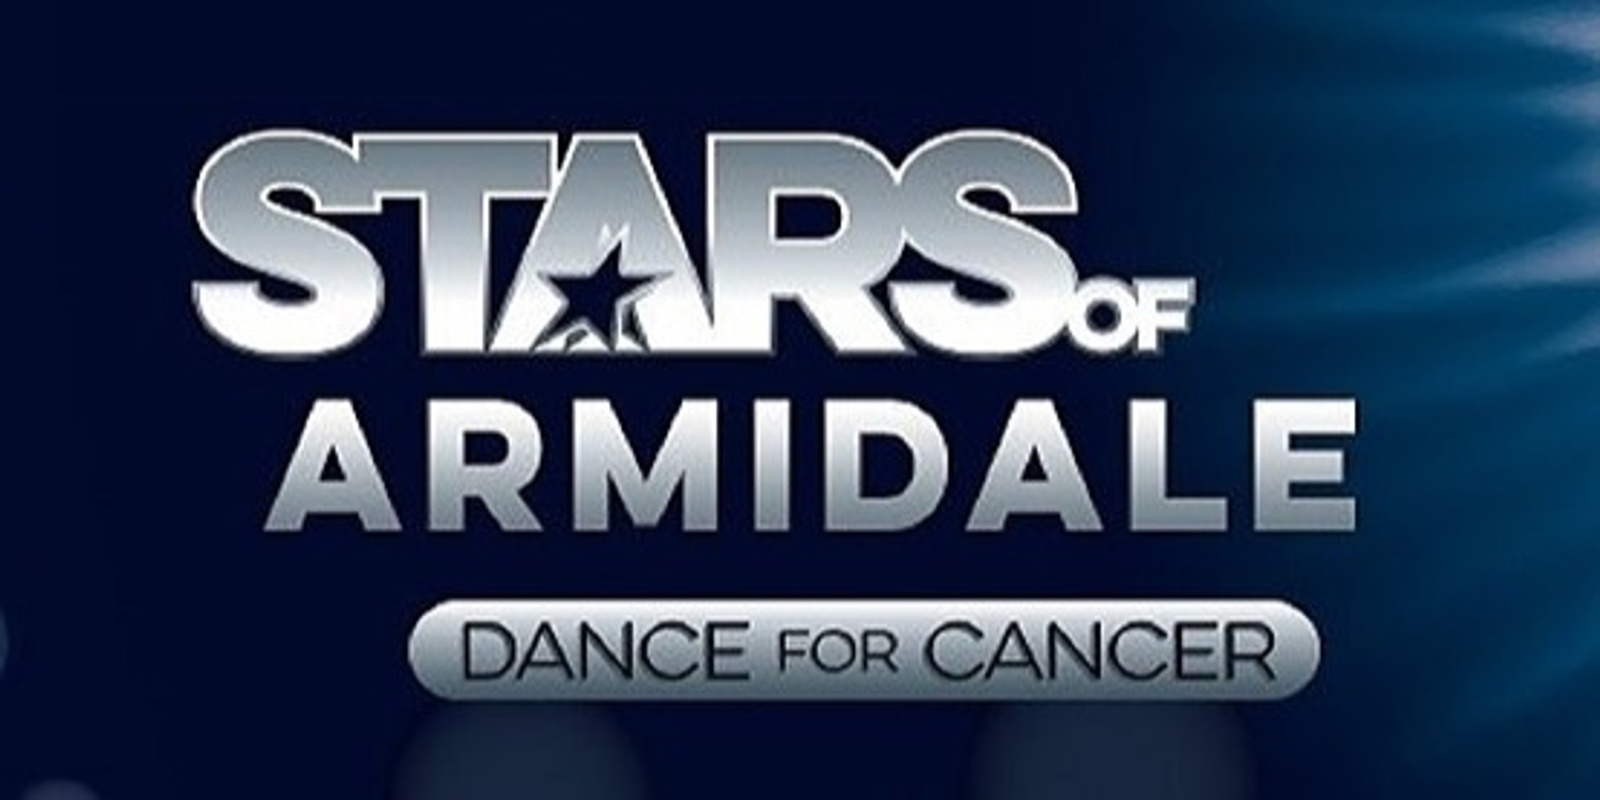 Banner image for Stars of Armidale Dance For Cancer